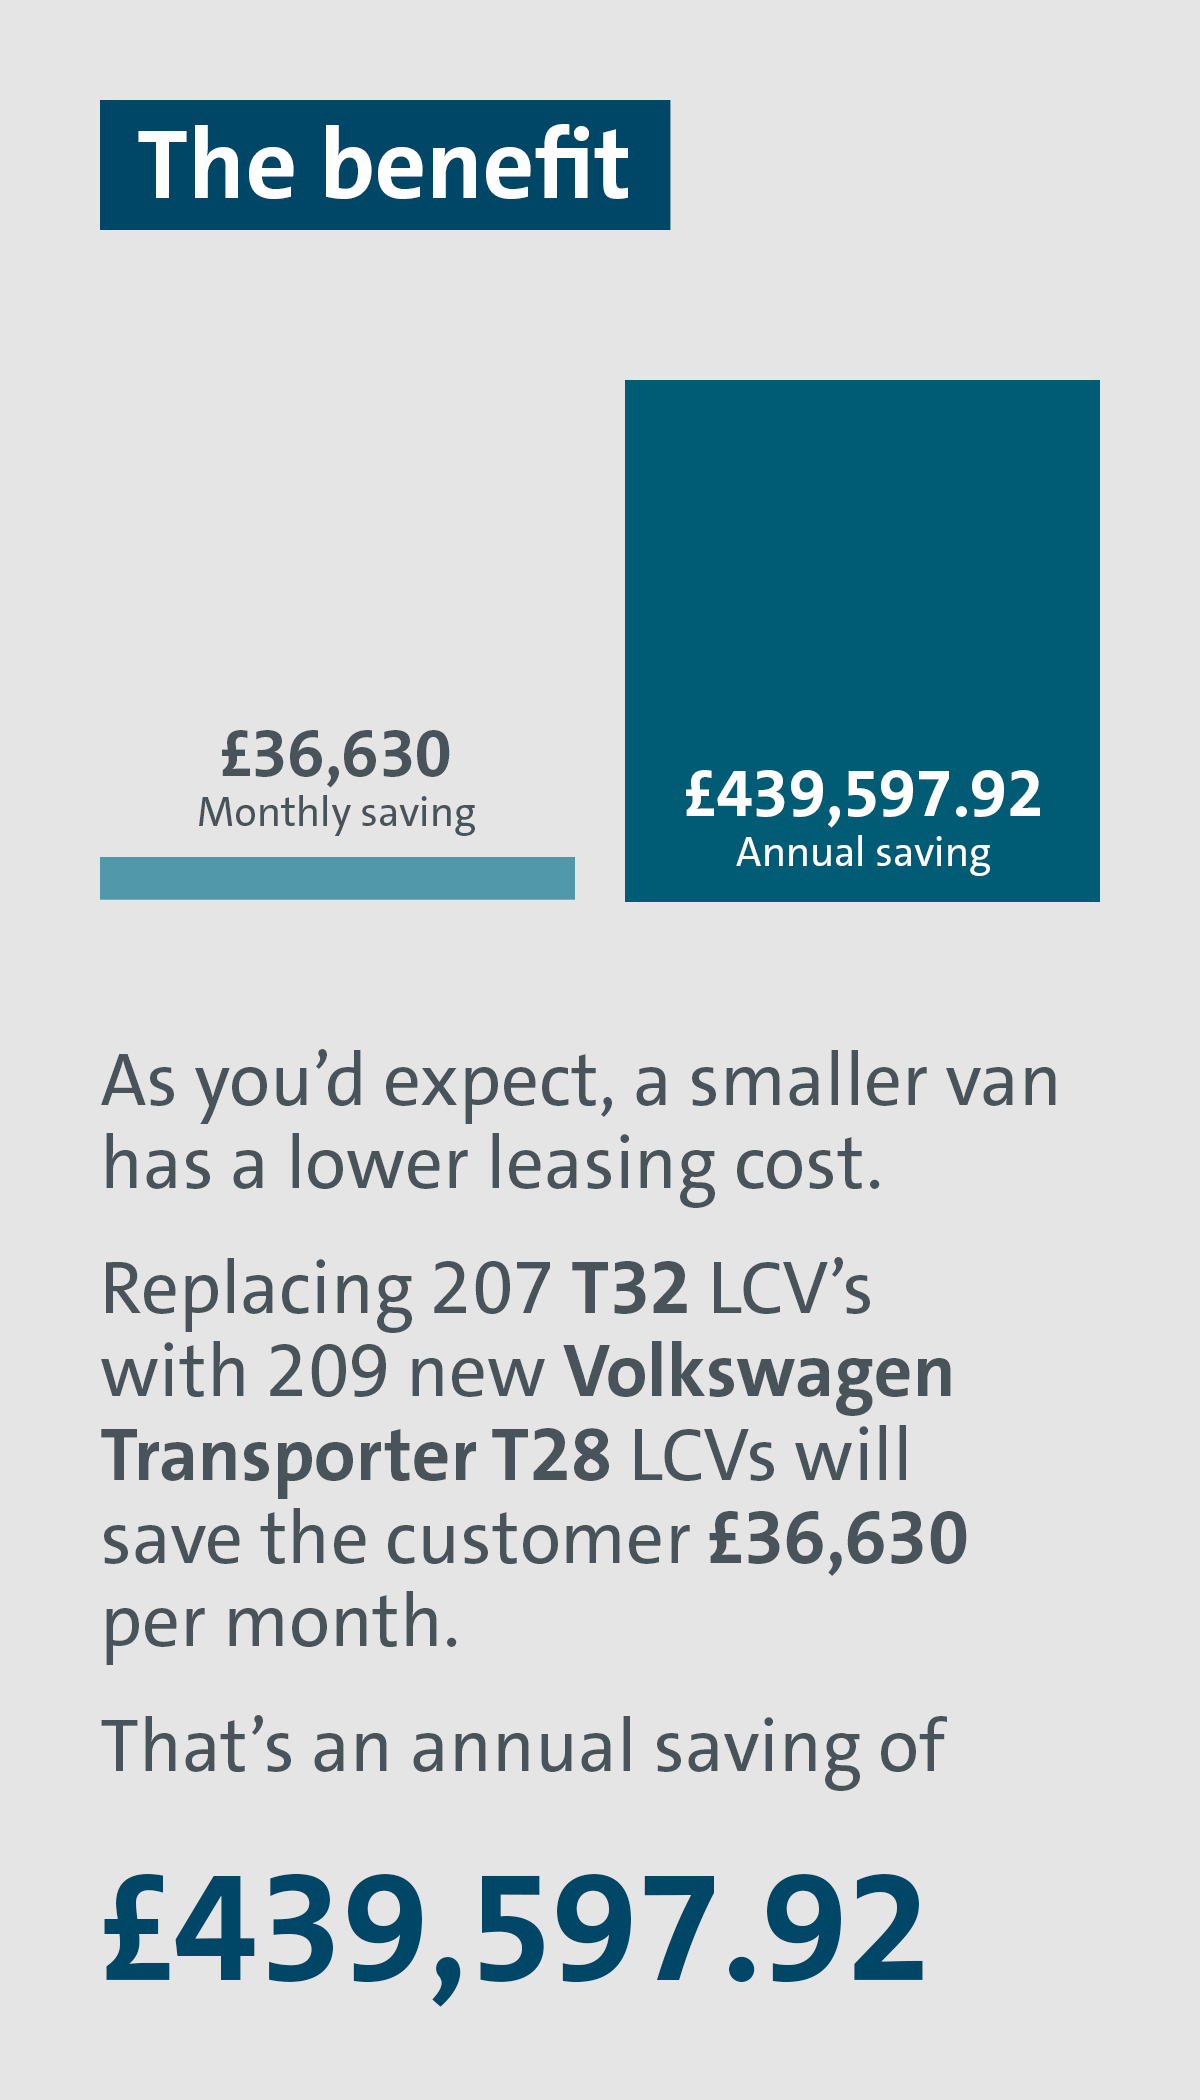 Smaller van has a lower leasing cost